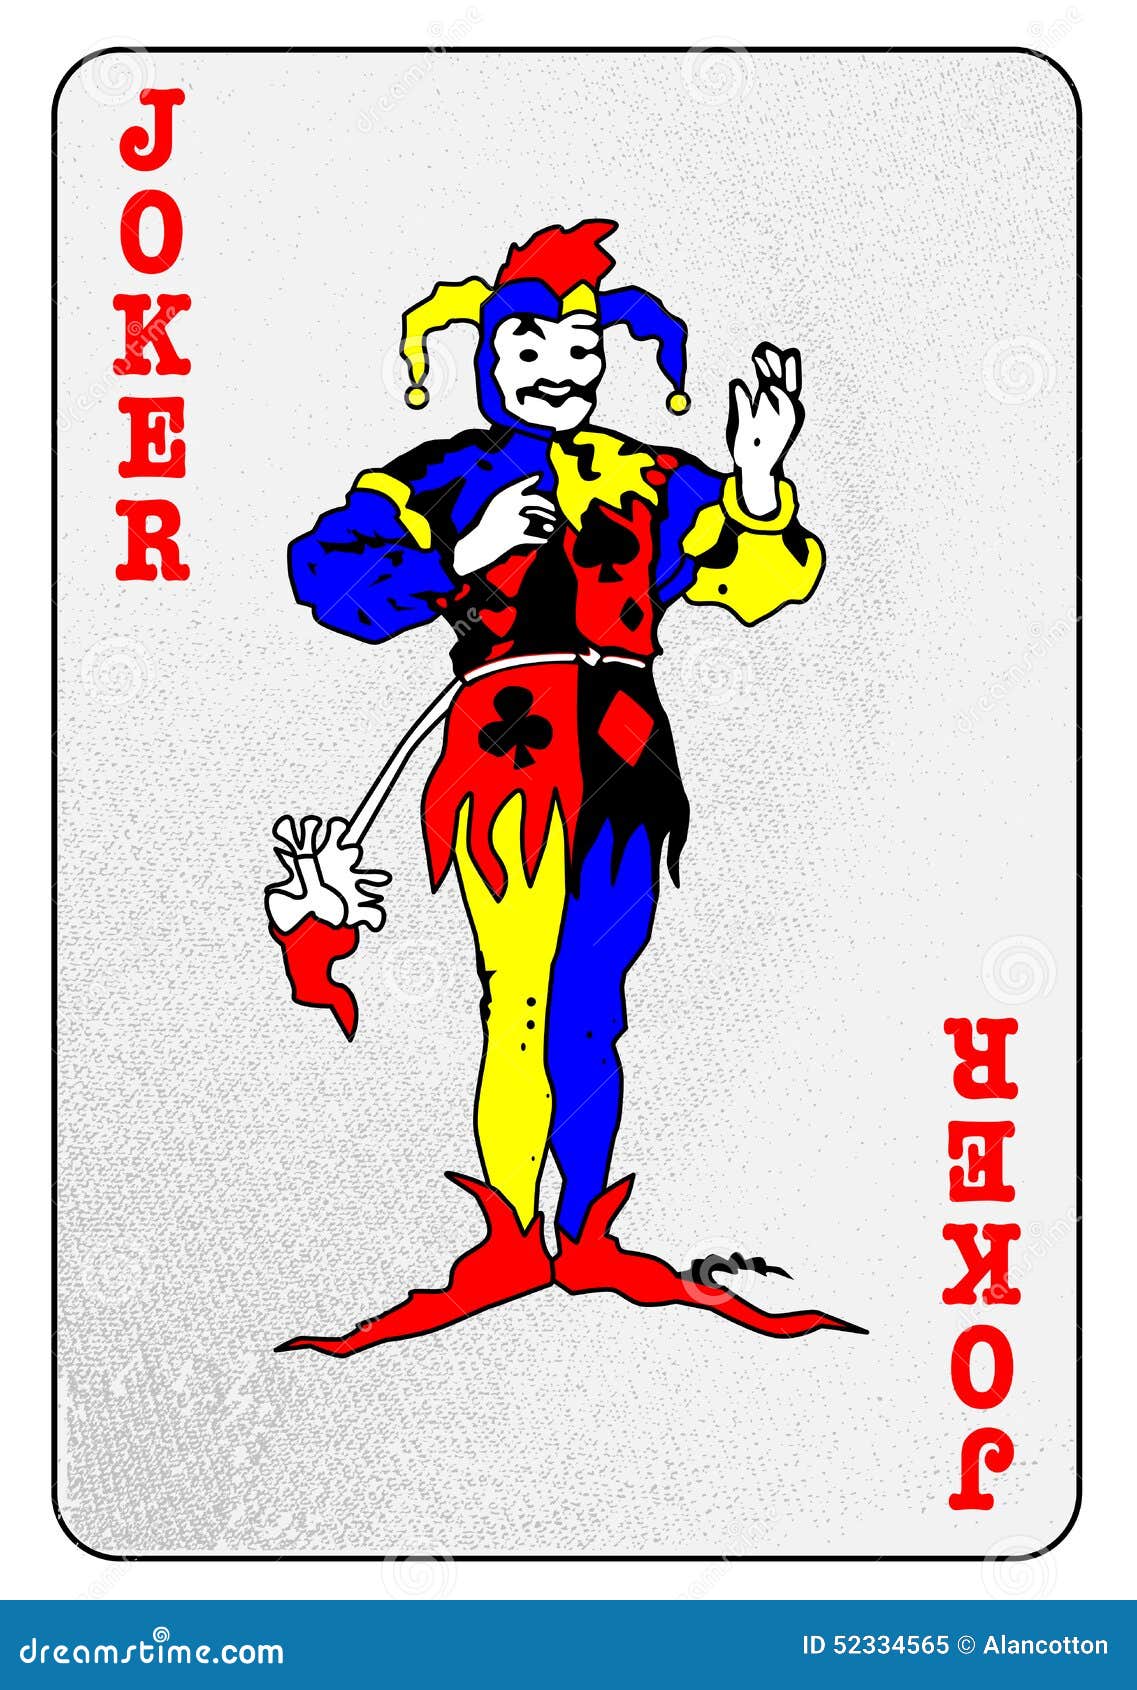 joker karta The Joker Card stock illustration. Illustration of chance   52334565 joker karta